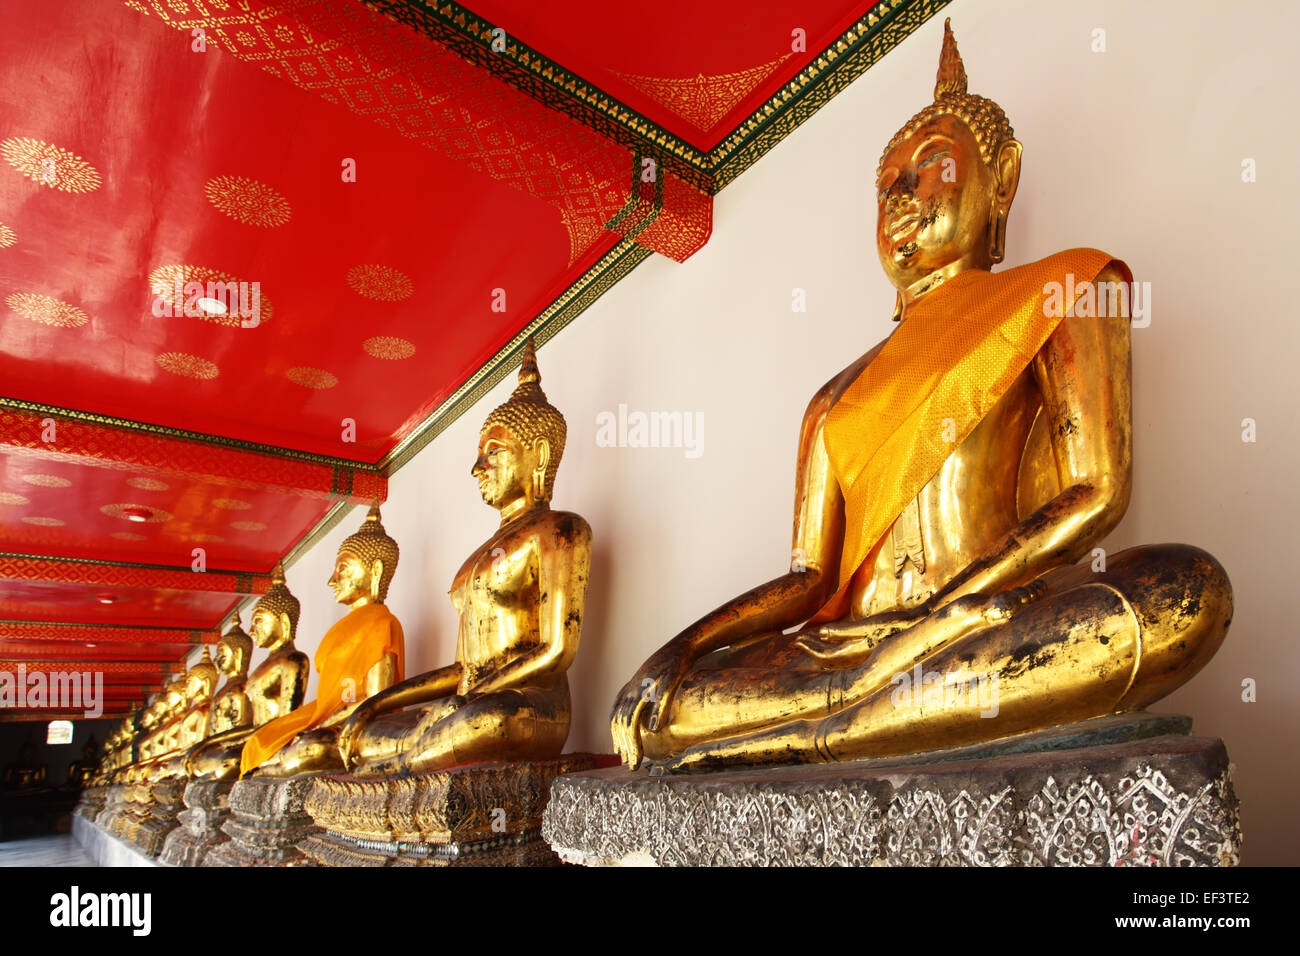 Gold statues of the Buddha abreast, Bangkok, Thailand Stock Photo